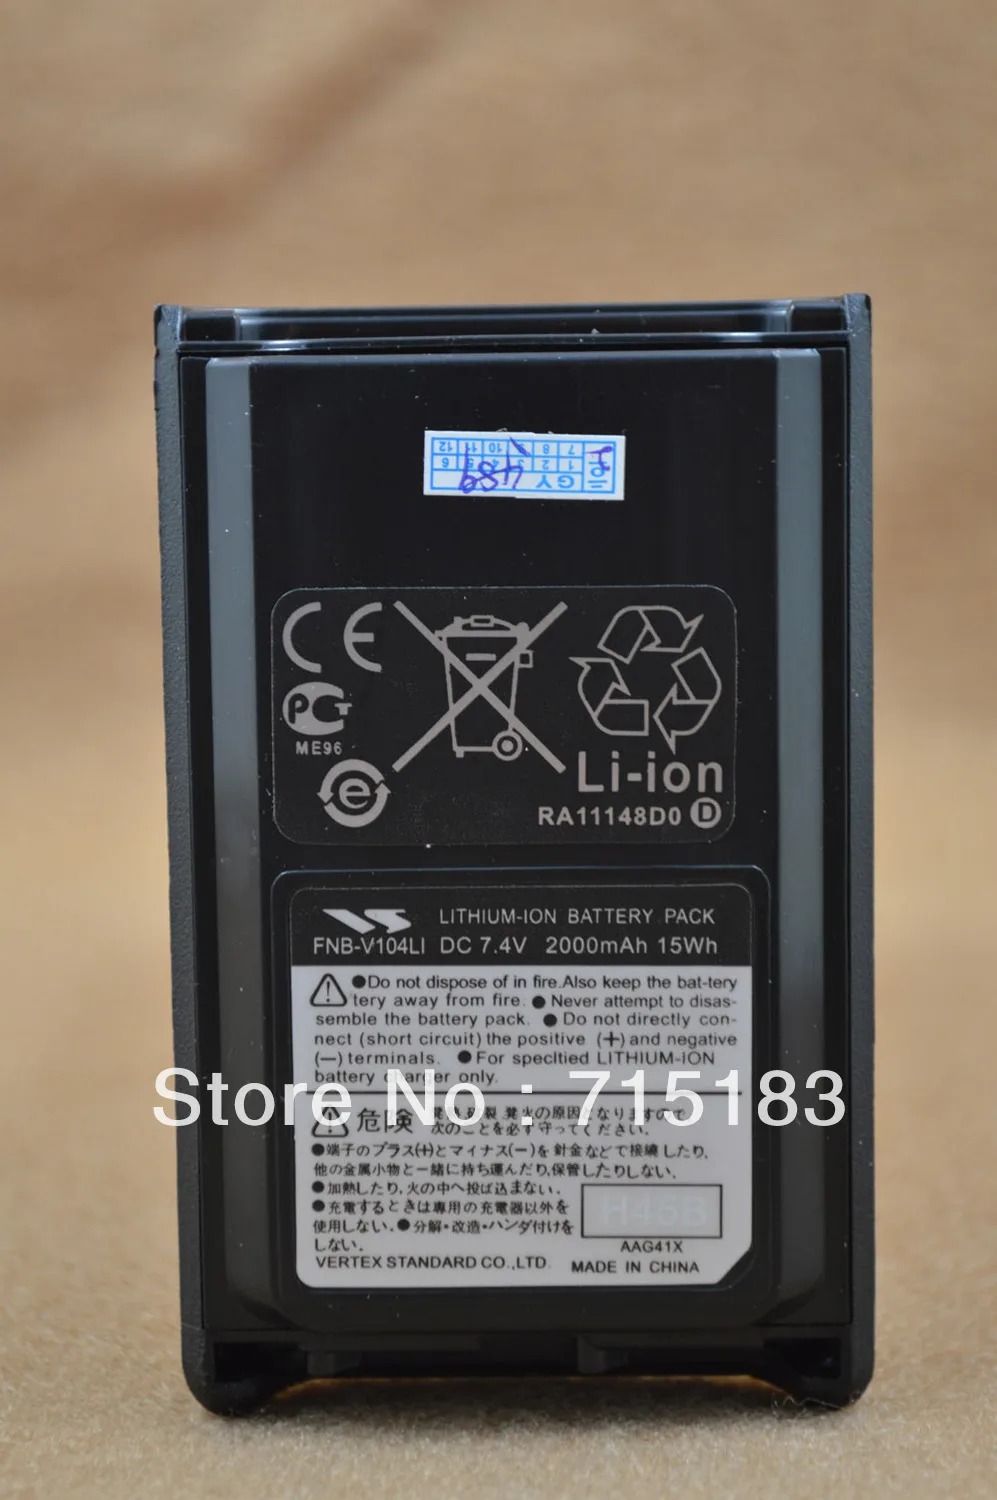 Vertex VX-231 VX-230 VX-228 литий-ионный Батарея пакет FNB-V104LI DC7.4V 2000 ма-ч